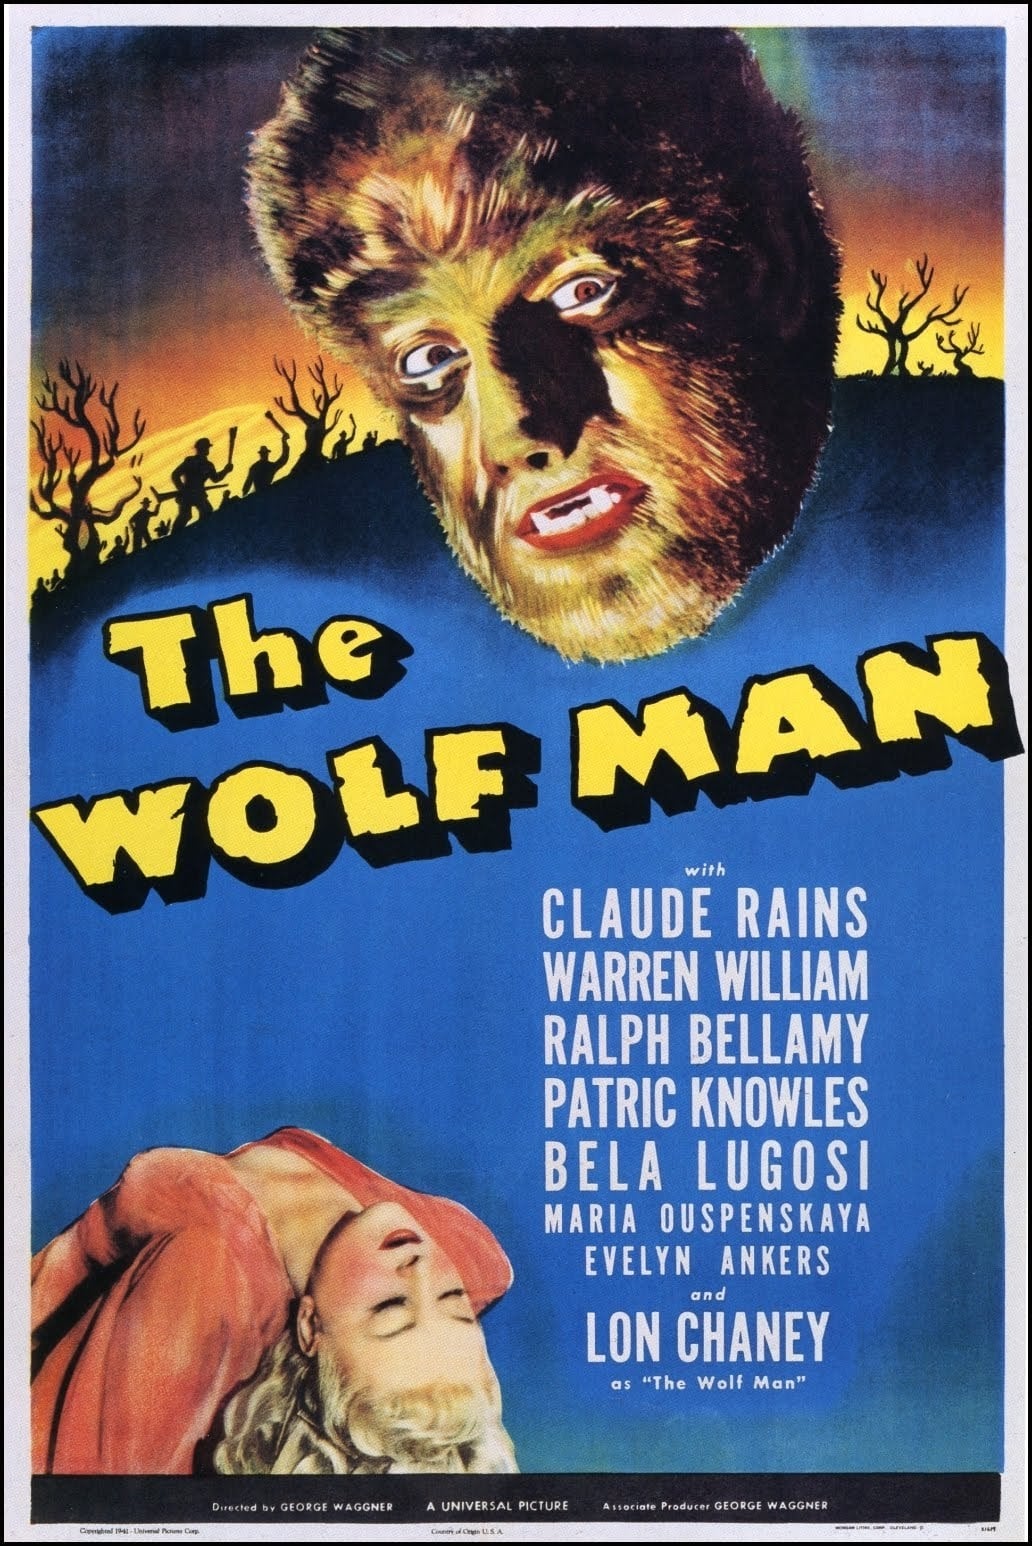 1941 The Wolf Man